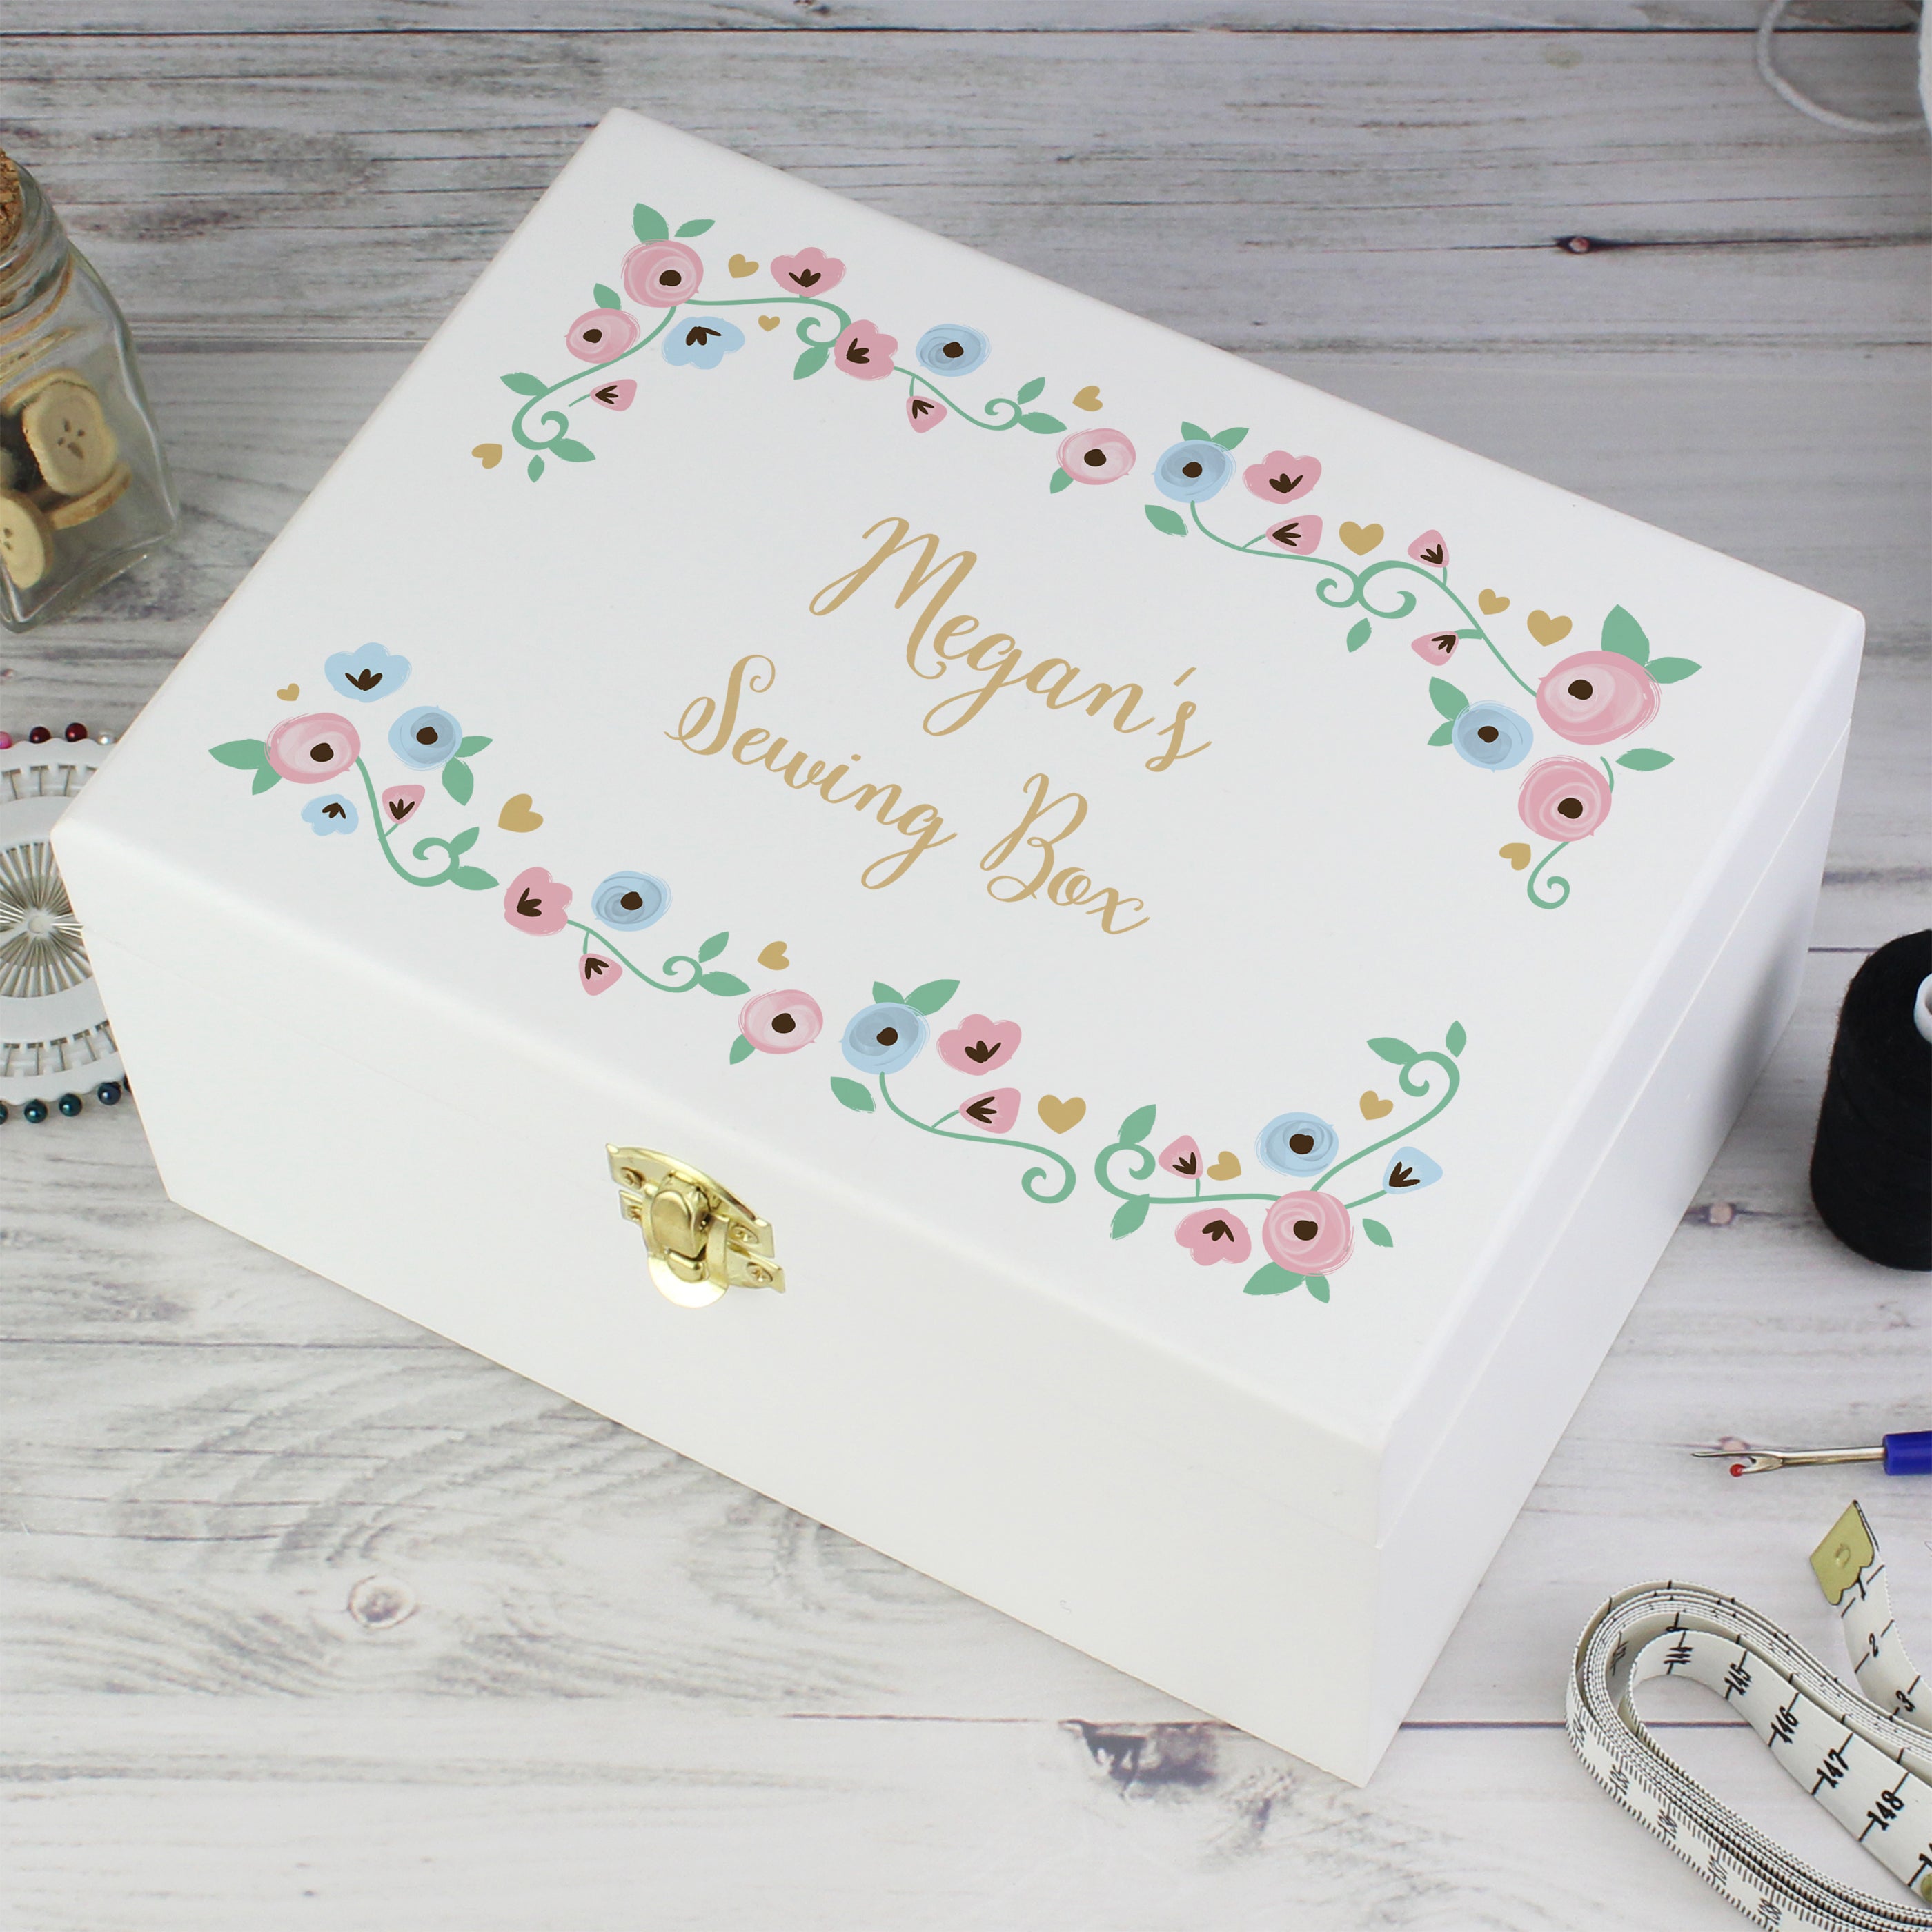 Personalised Fairytale Floral White Wooden Keepsake Box